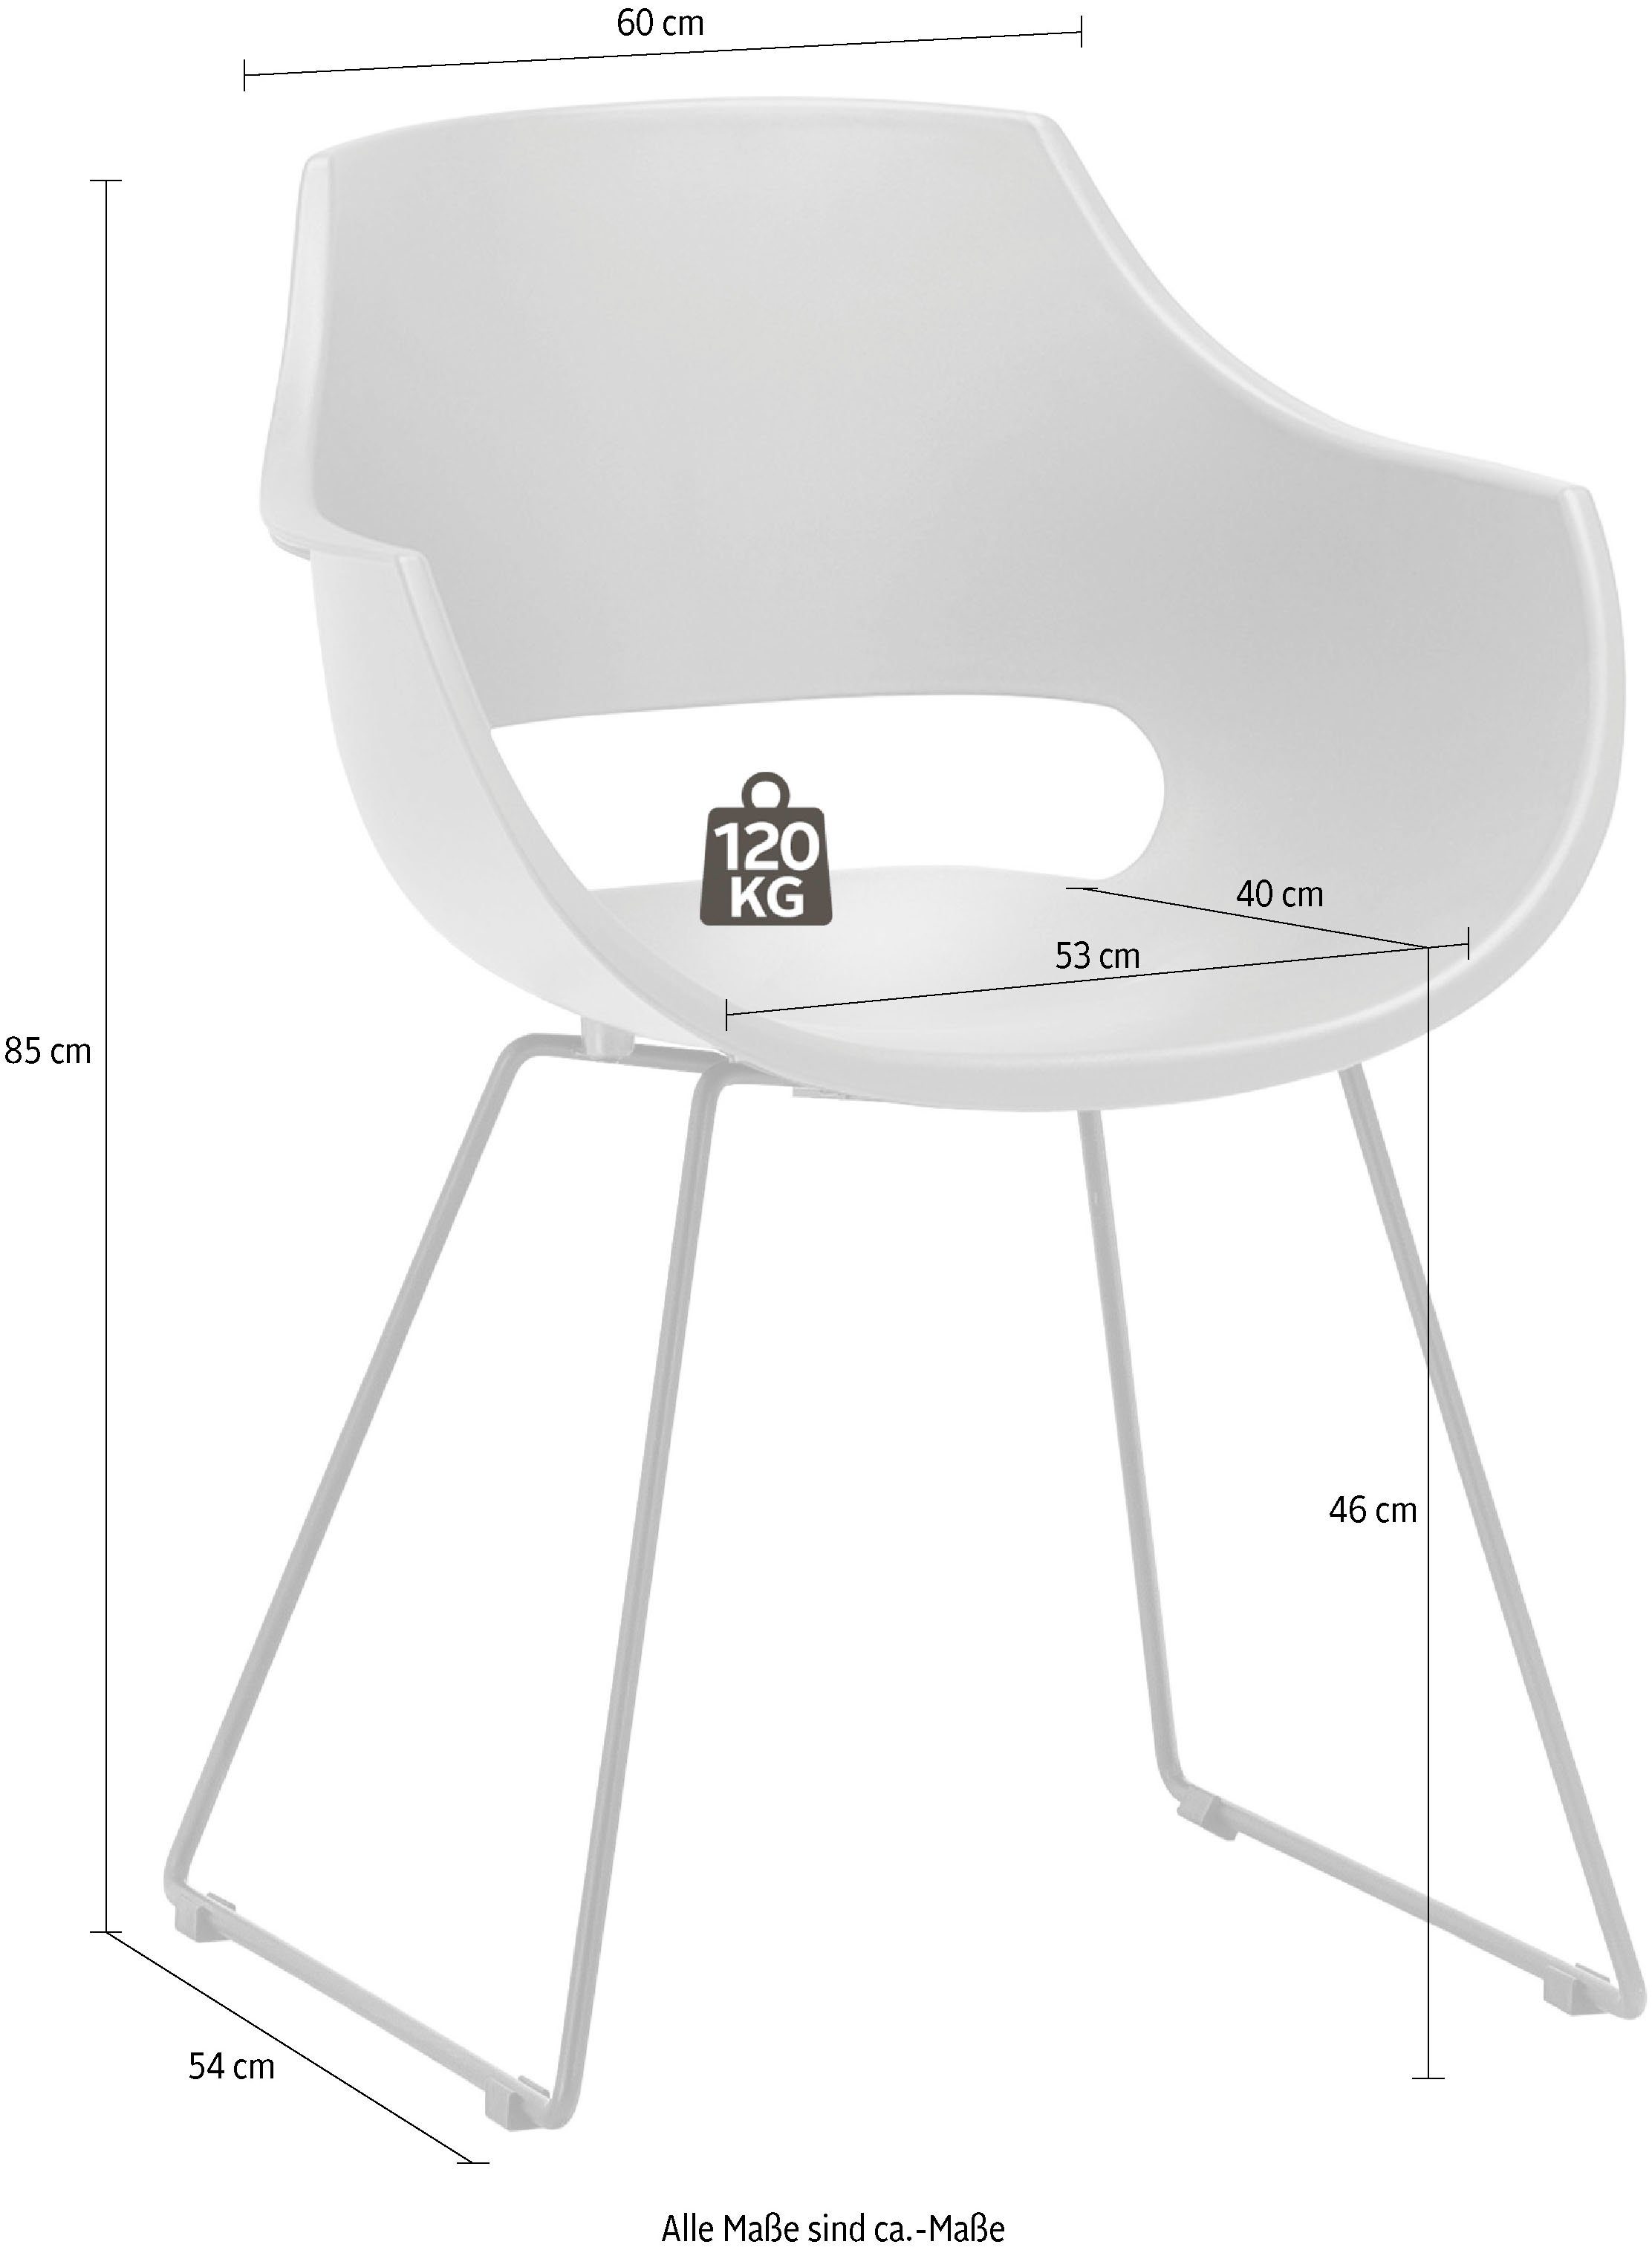 MCA furniture Schalenstuhl Rockville (Set, Grün belastbar bis St), | 4 Stuhl Kg Grün 120